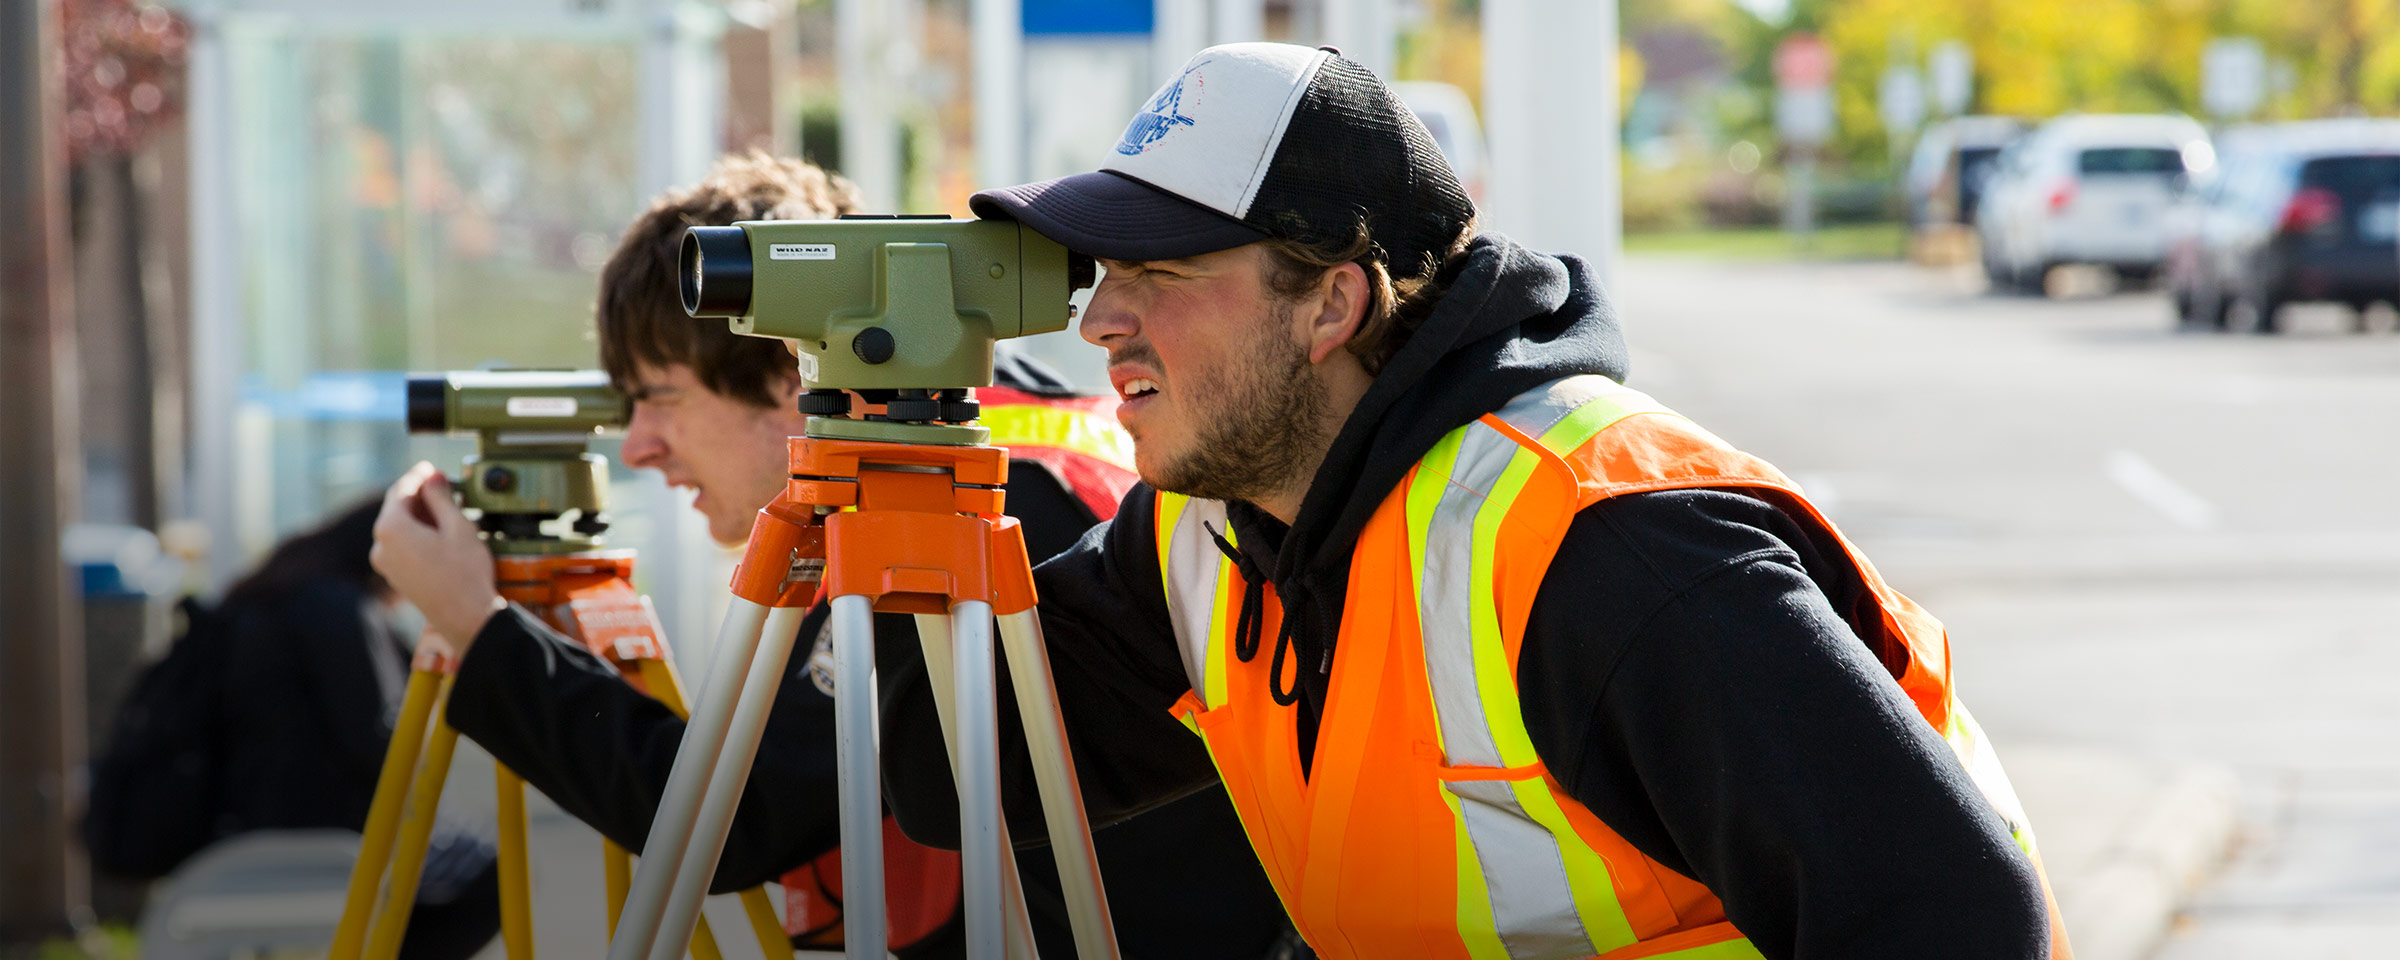 Civil technician student surveying outdoors